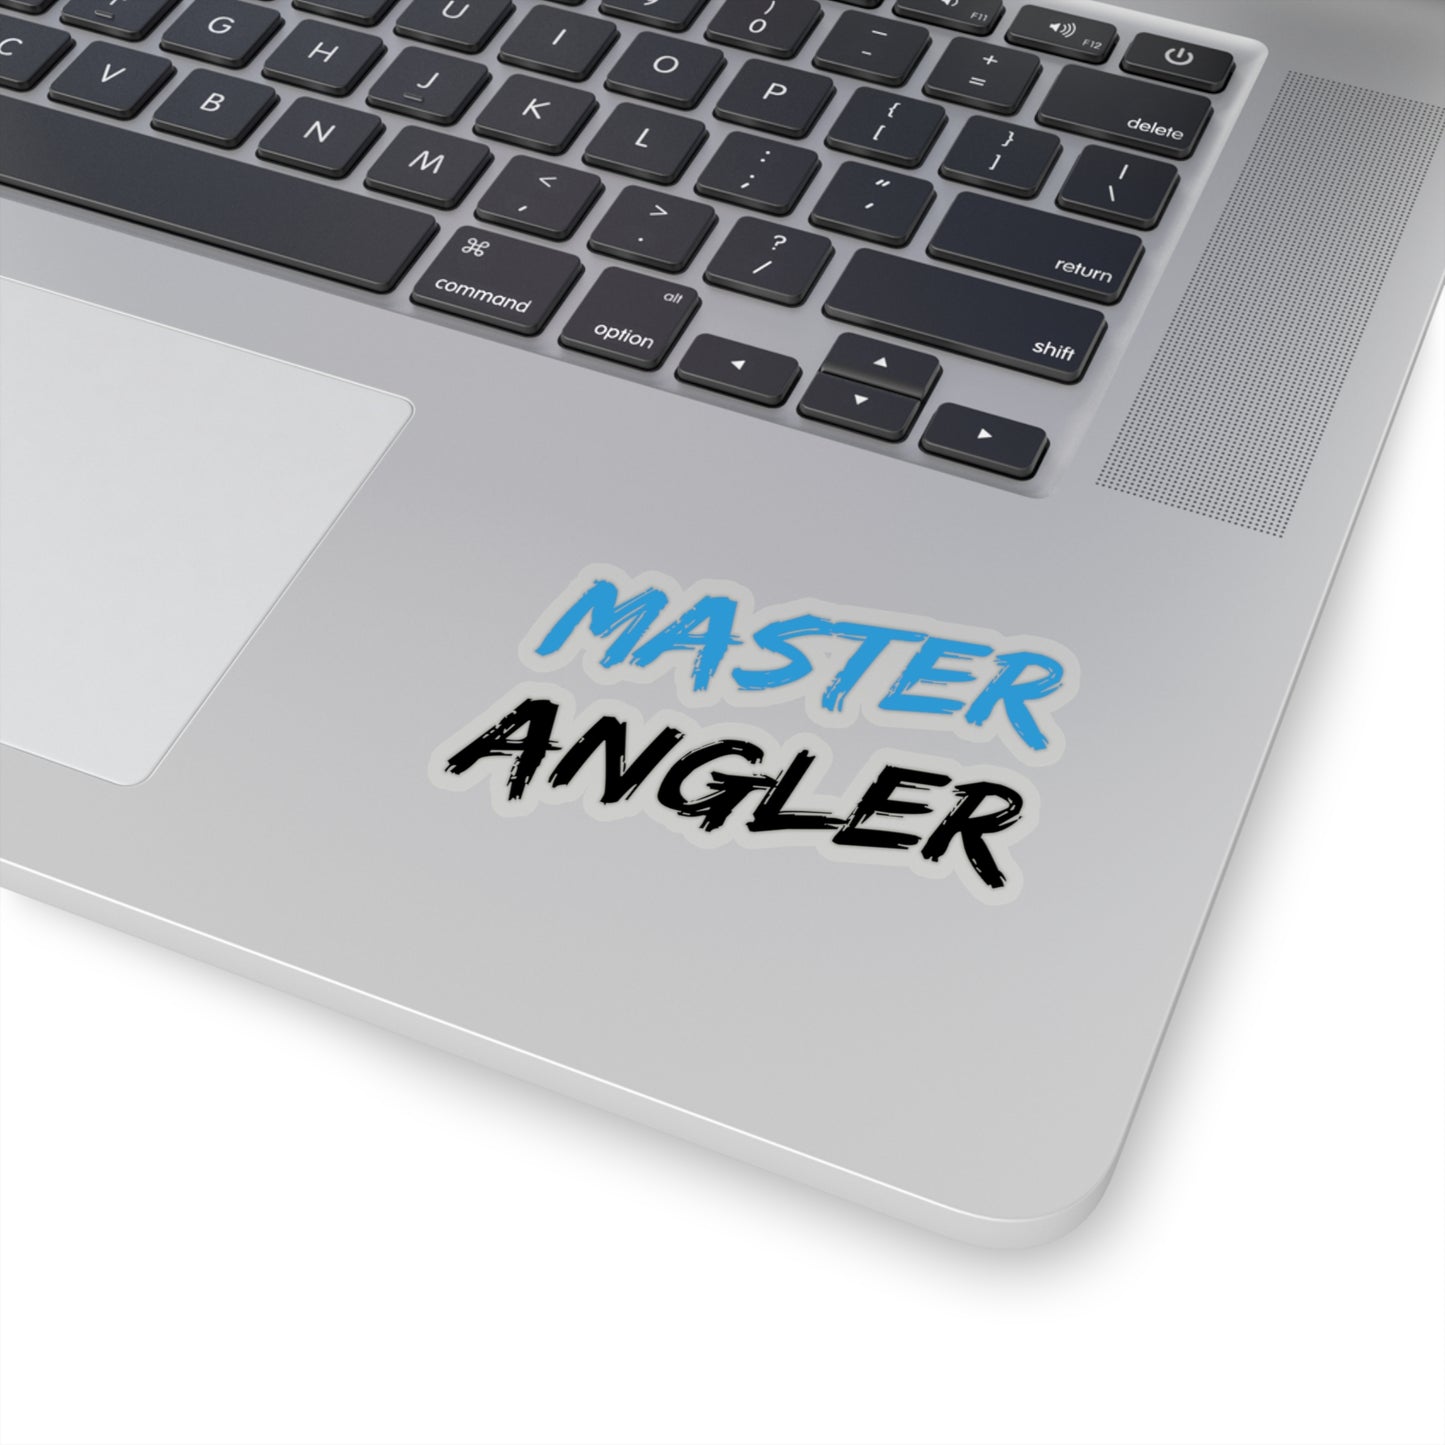 Master Angler Sticker - Square Blue